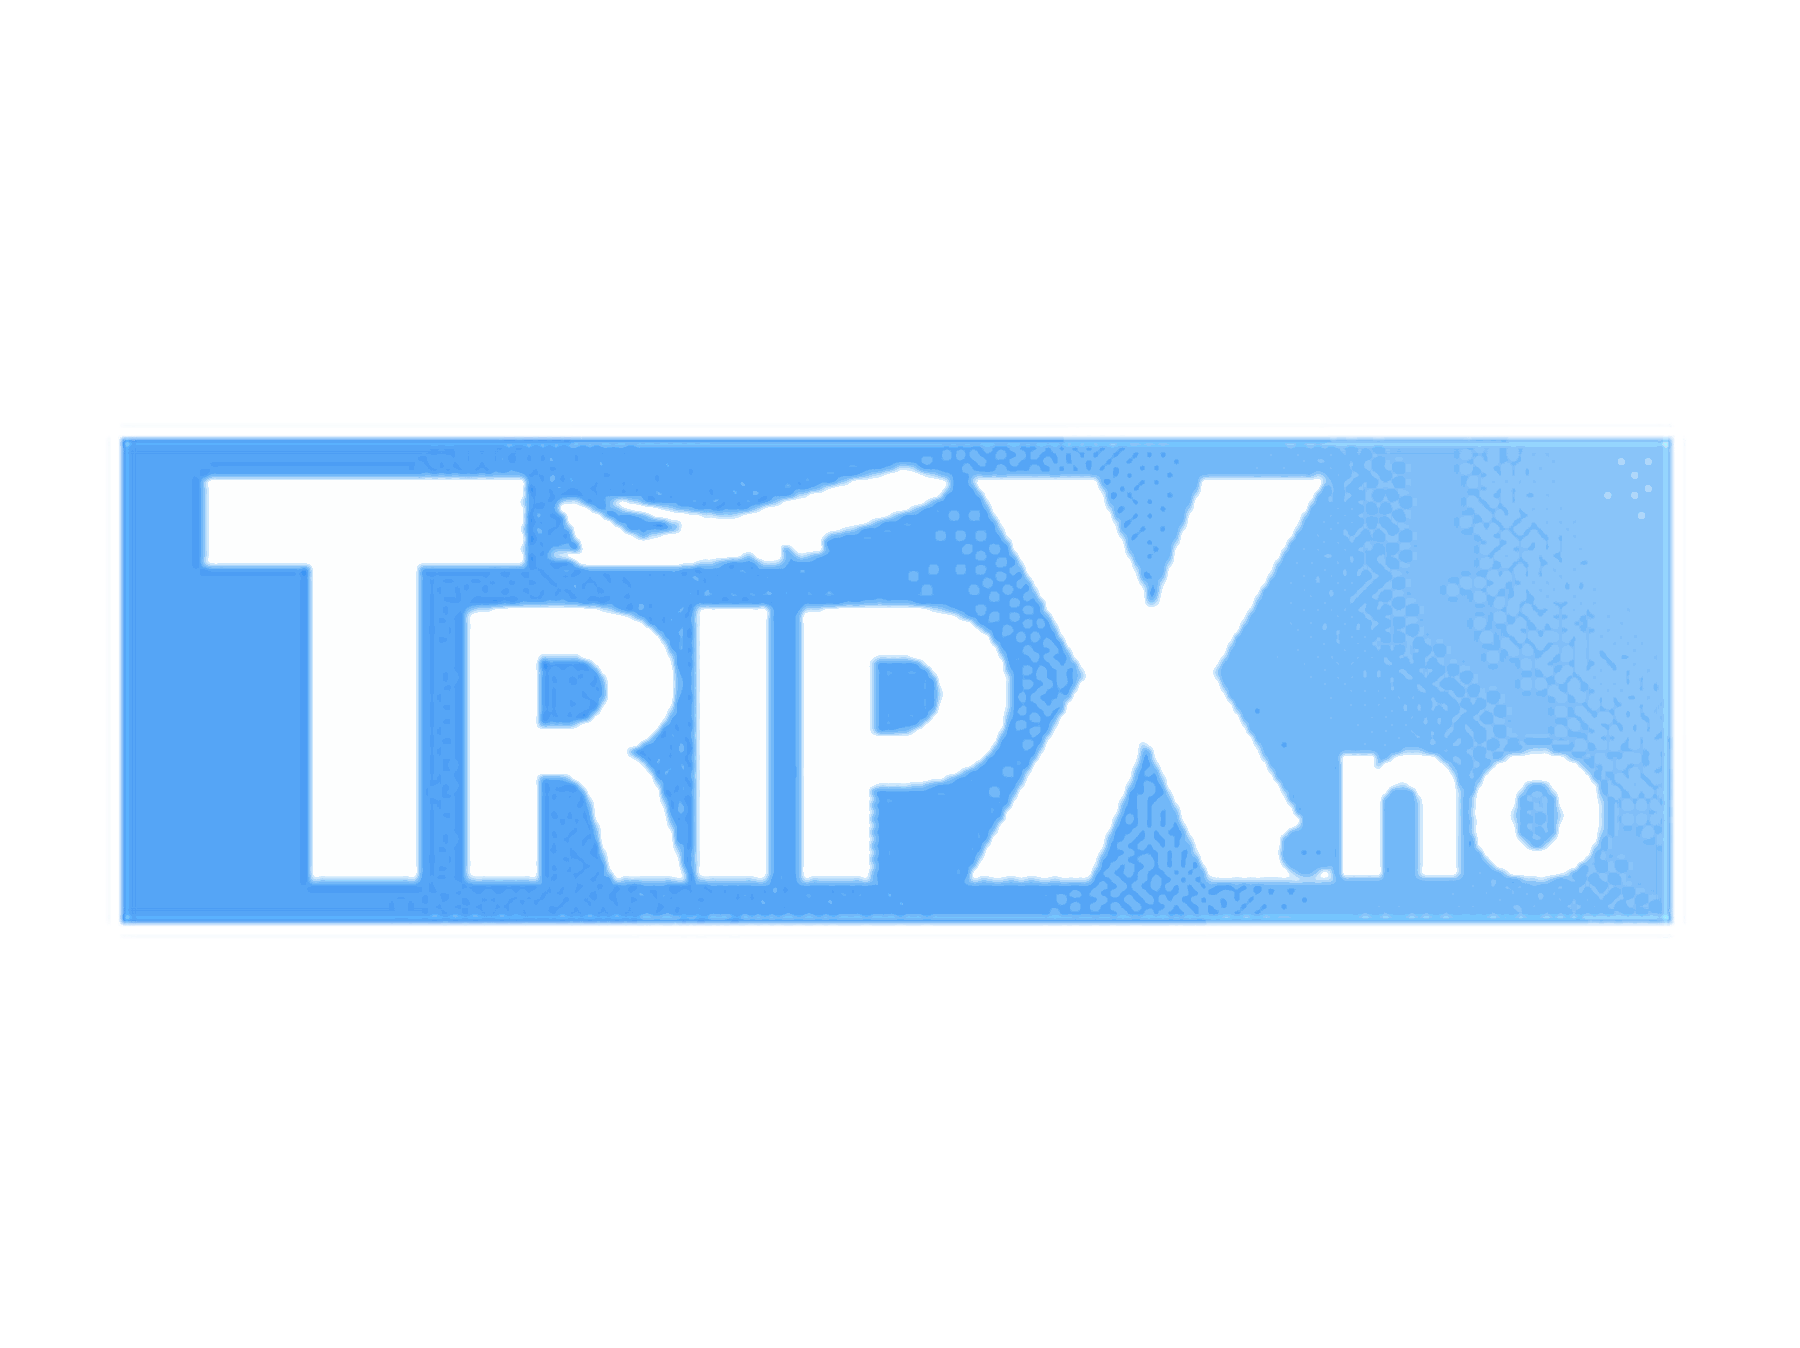 TripX rabattkoder